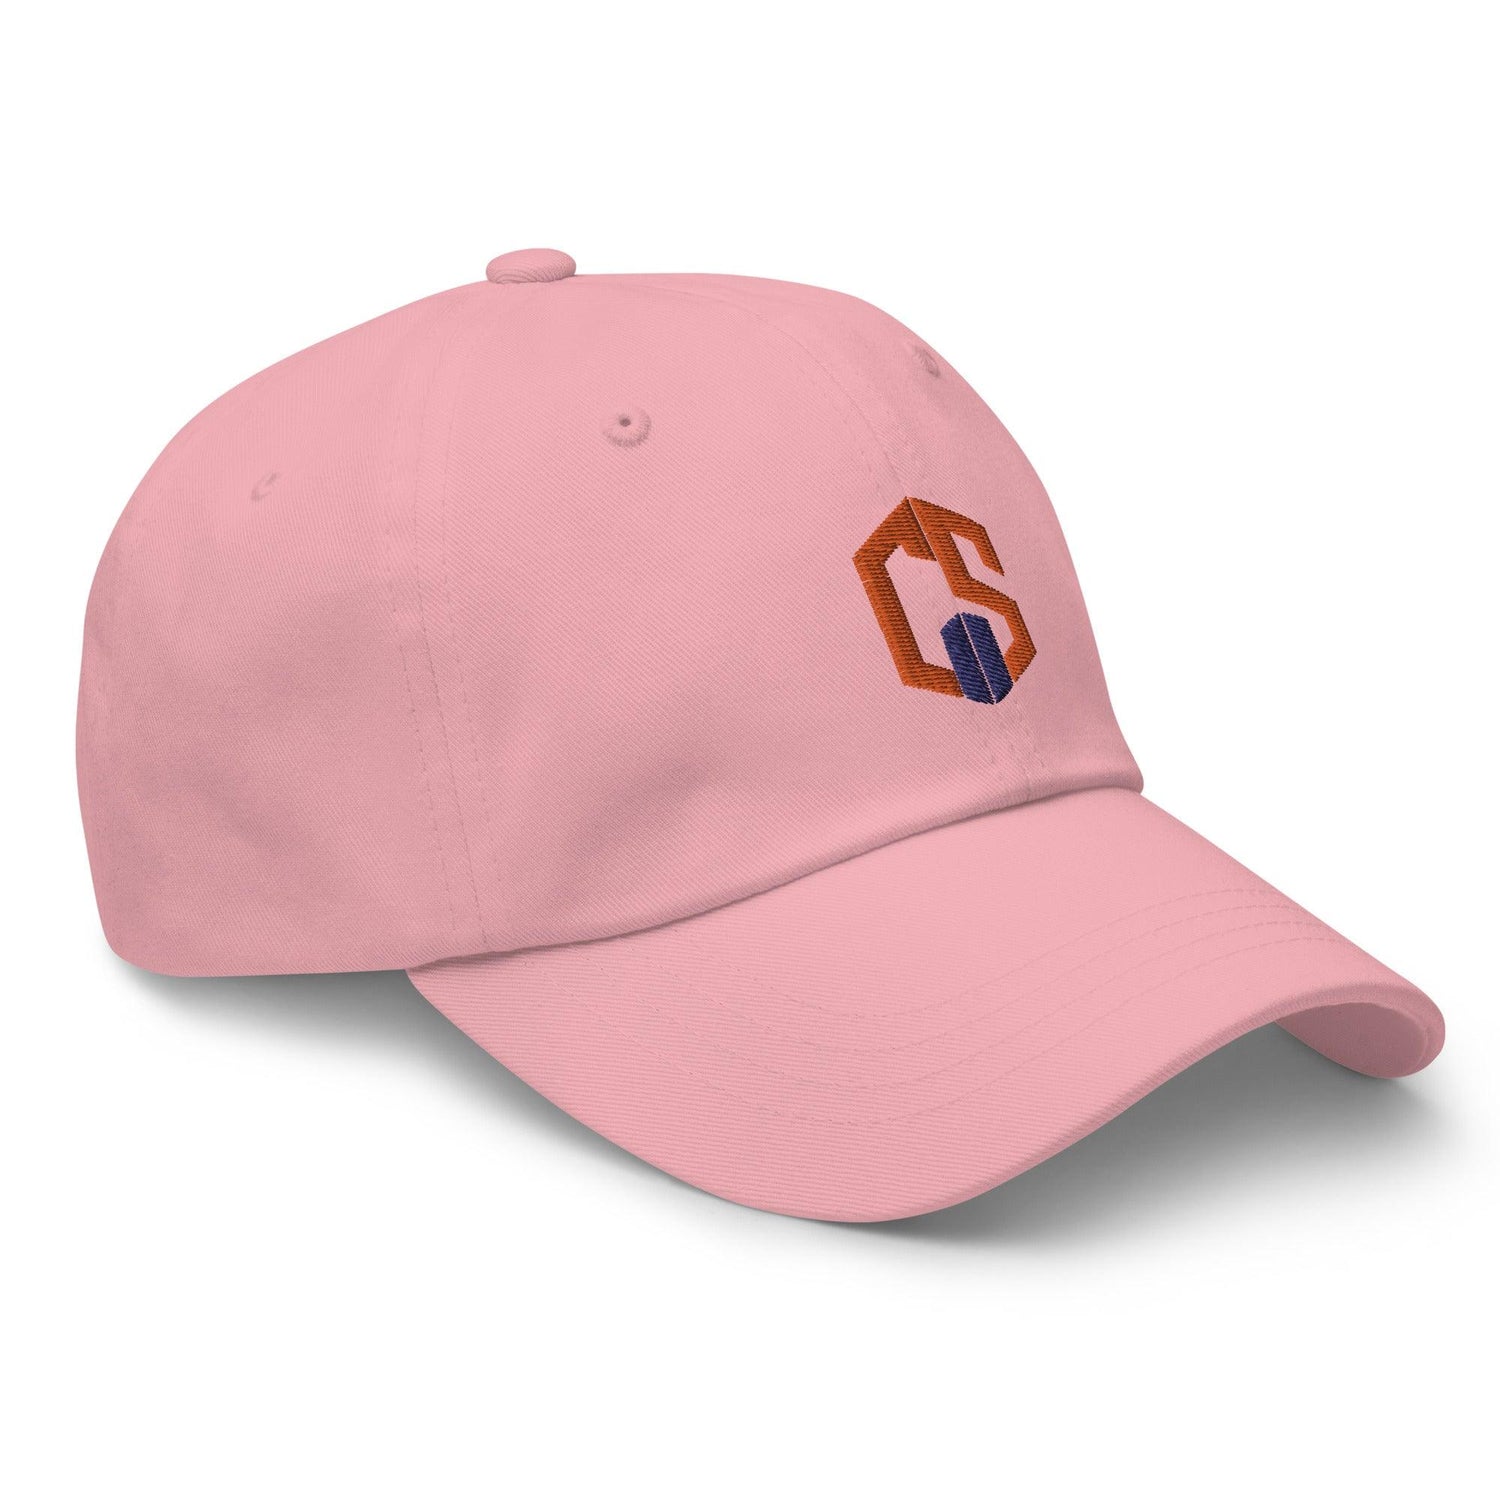 Casey Saucke II “Signature” hat - Fan Arch